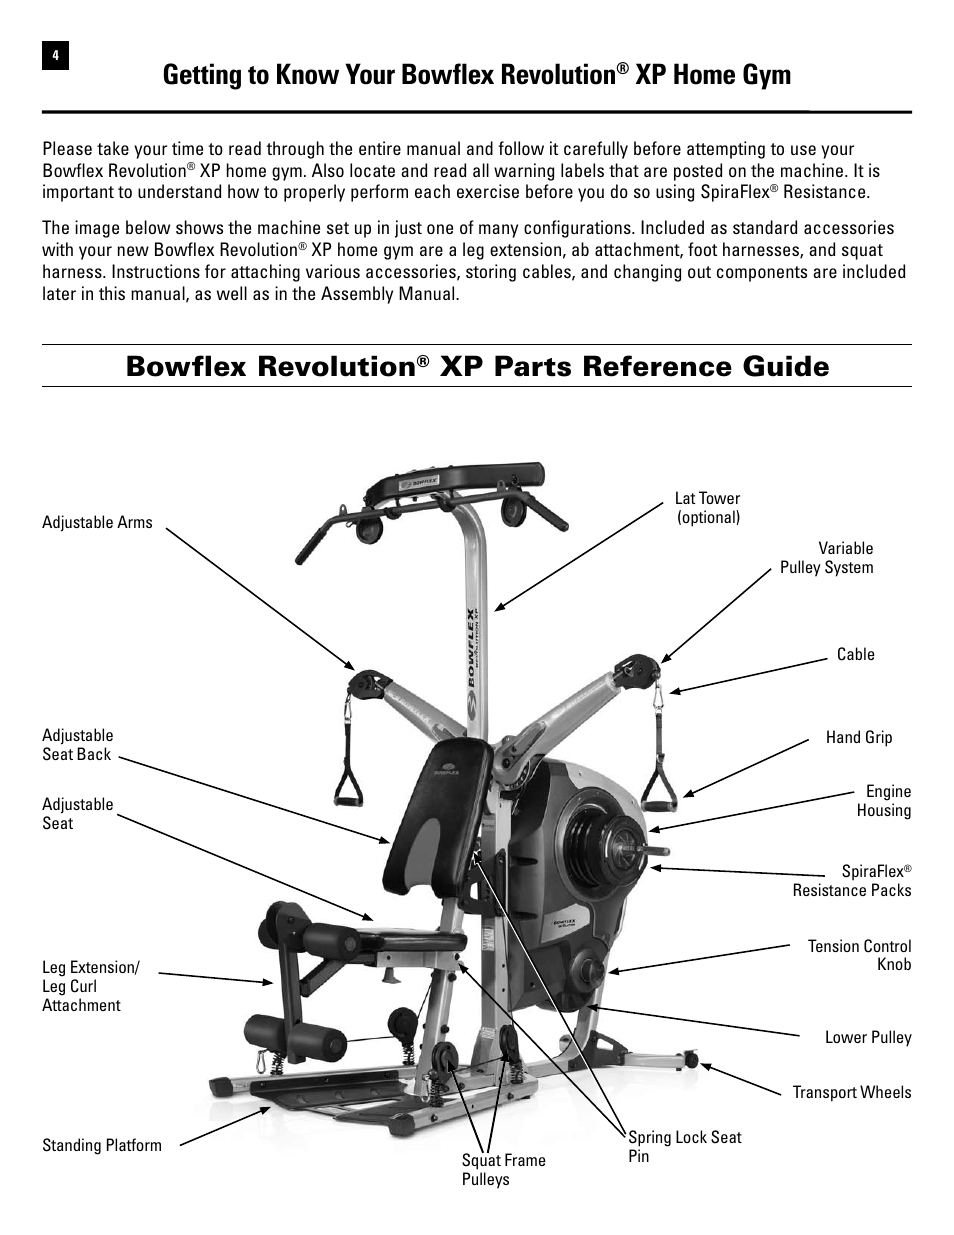 Bowflex revolution, Xp parts reference guide, Getting to know your bowflex revolution | Xp home gym | Bowflex Revolution XP User Manual | Page 6 / 100